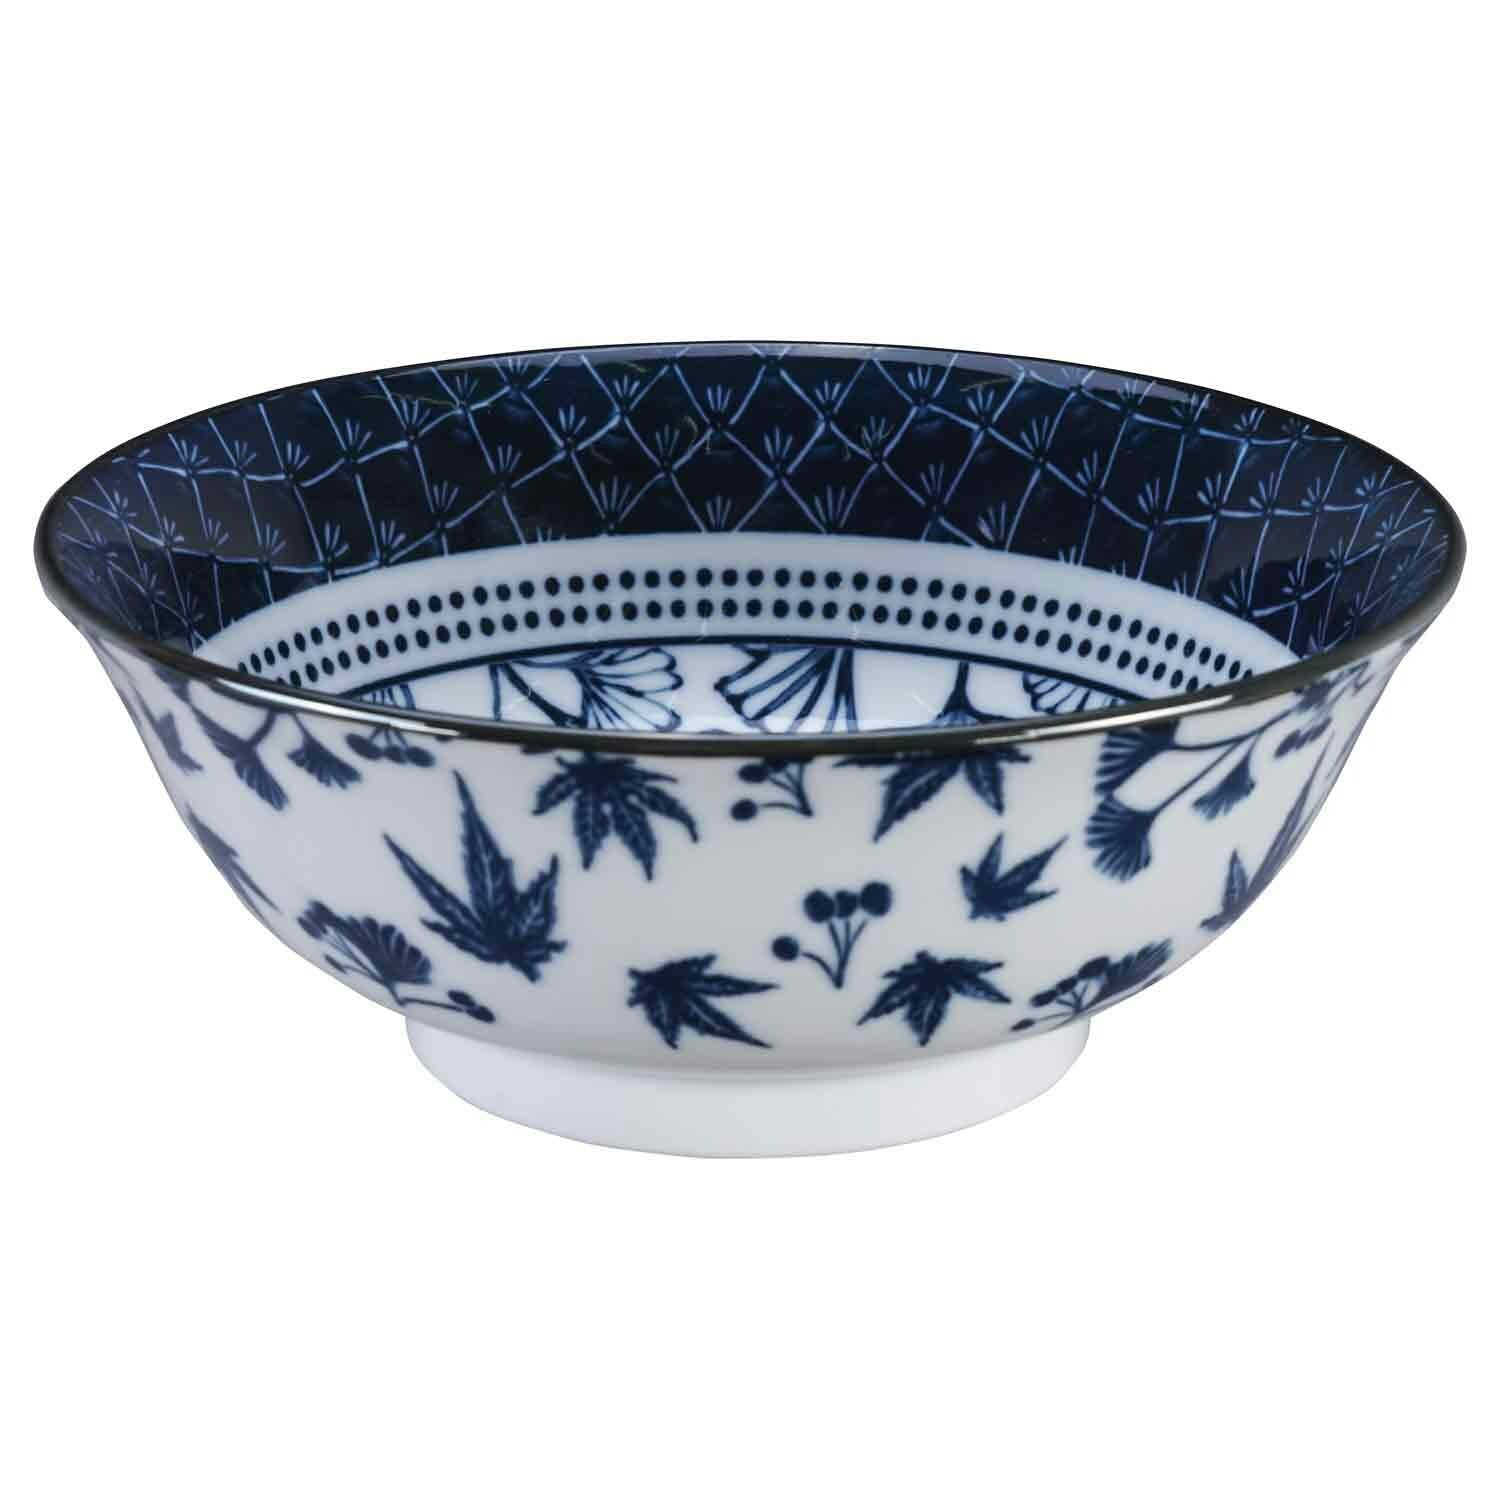 Aisai Seigaiha Ramen Bowl, 1,3 L - Tokyo Design @ RoyalDesign